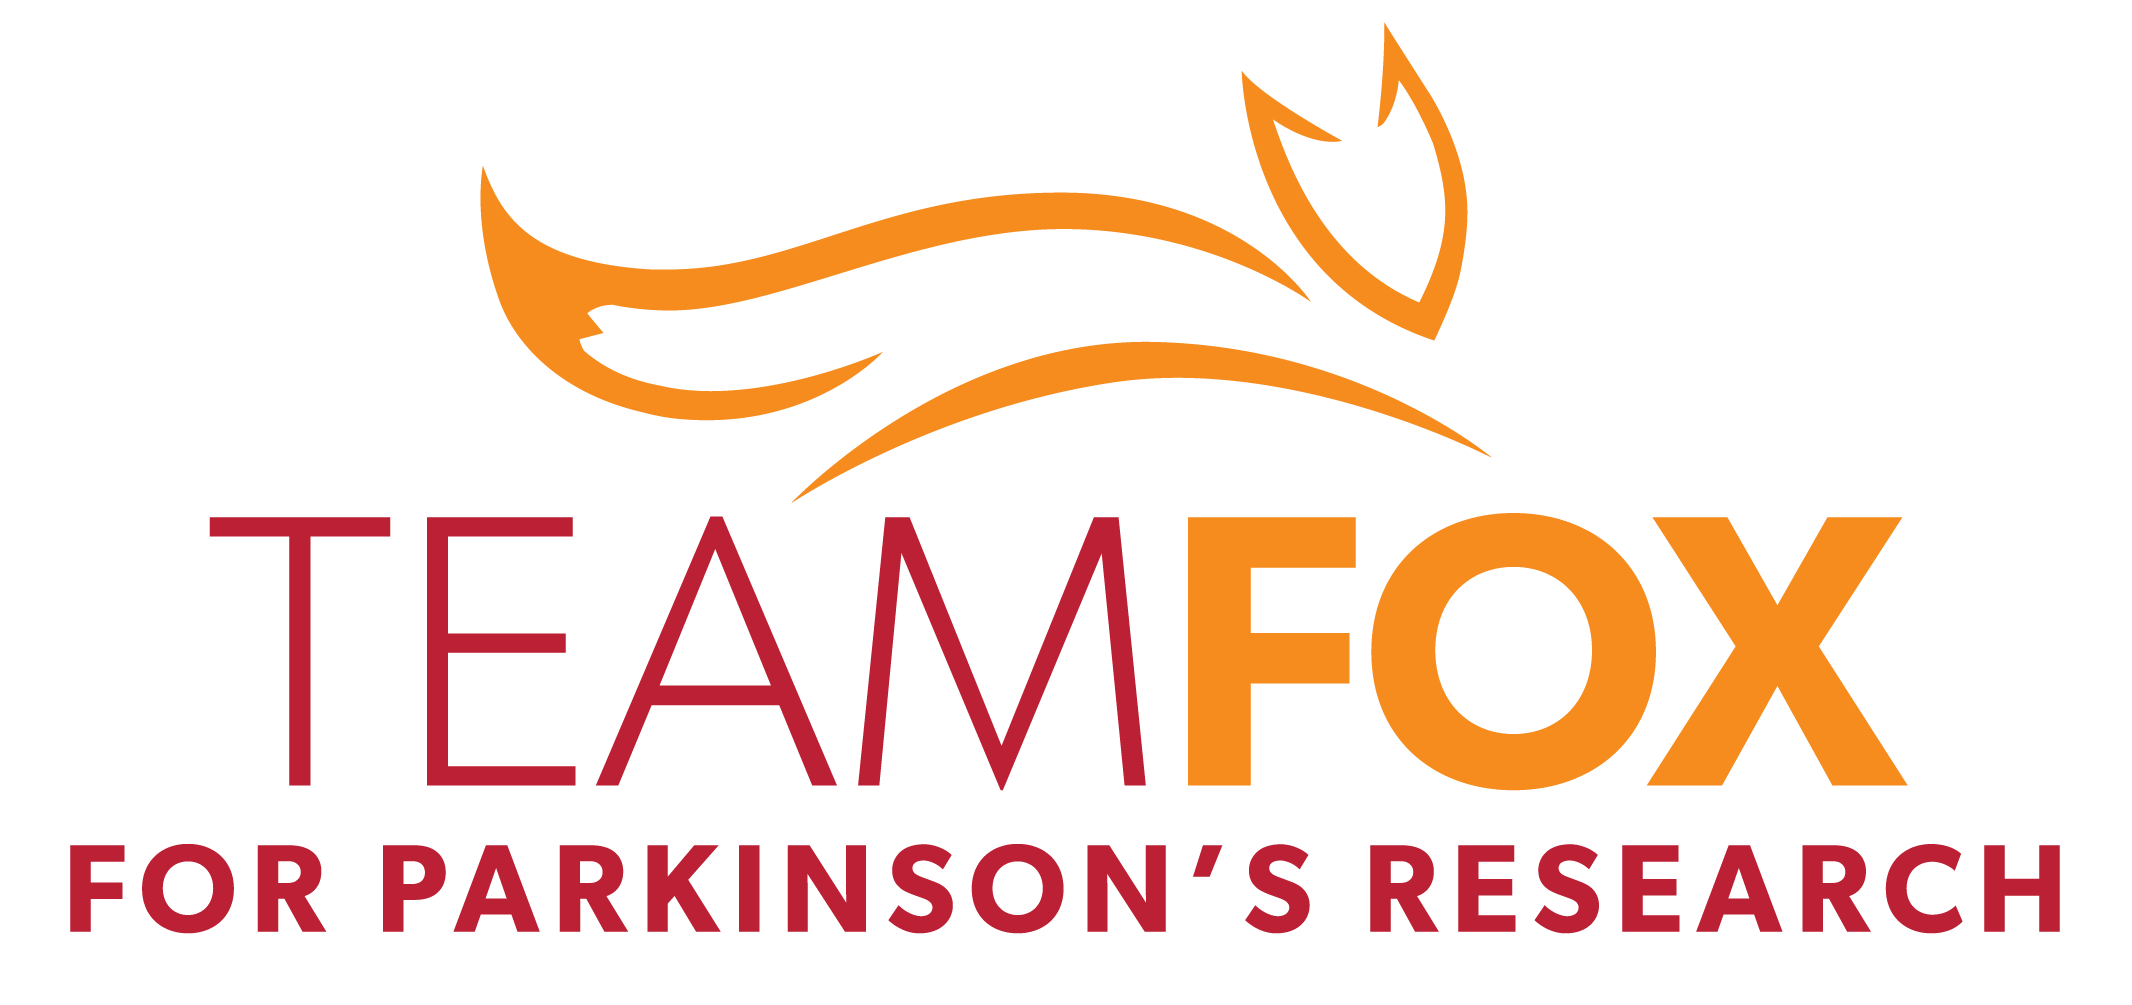 logo voor Michael J Fox Foundation